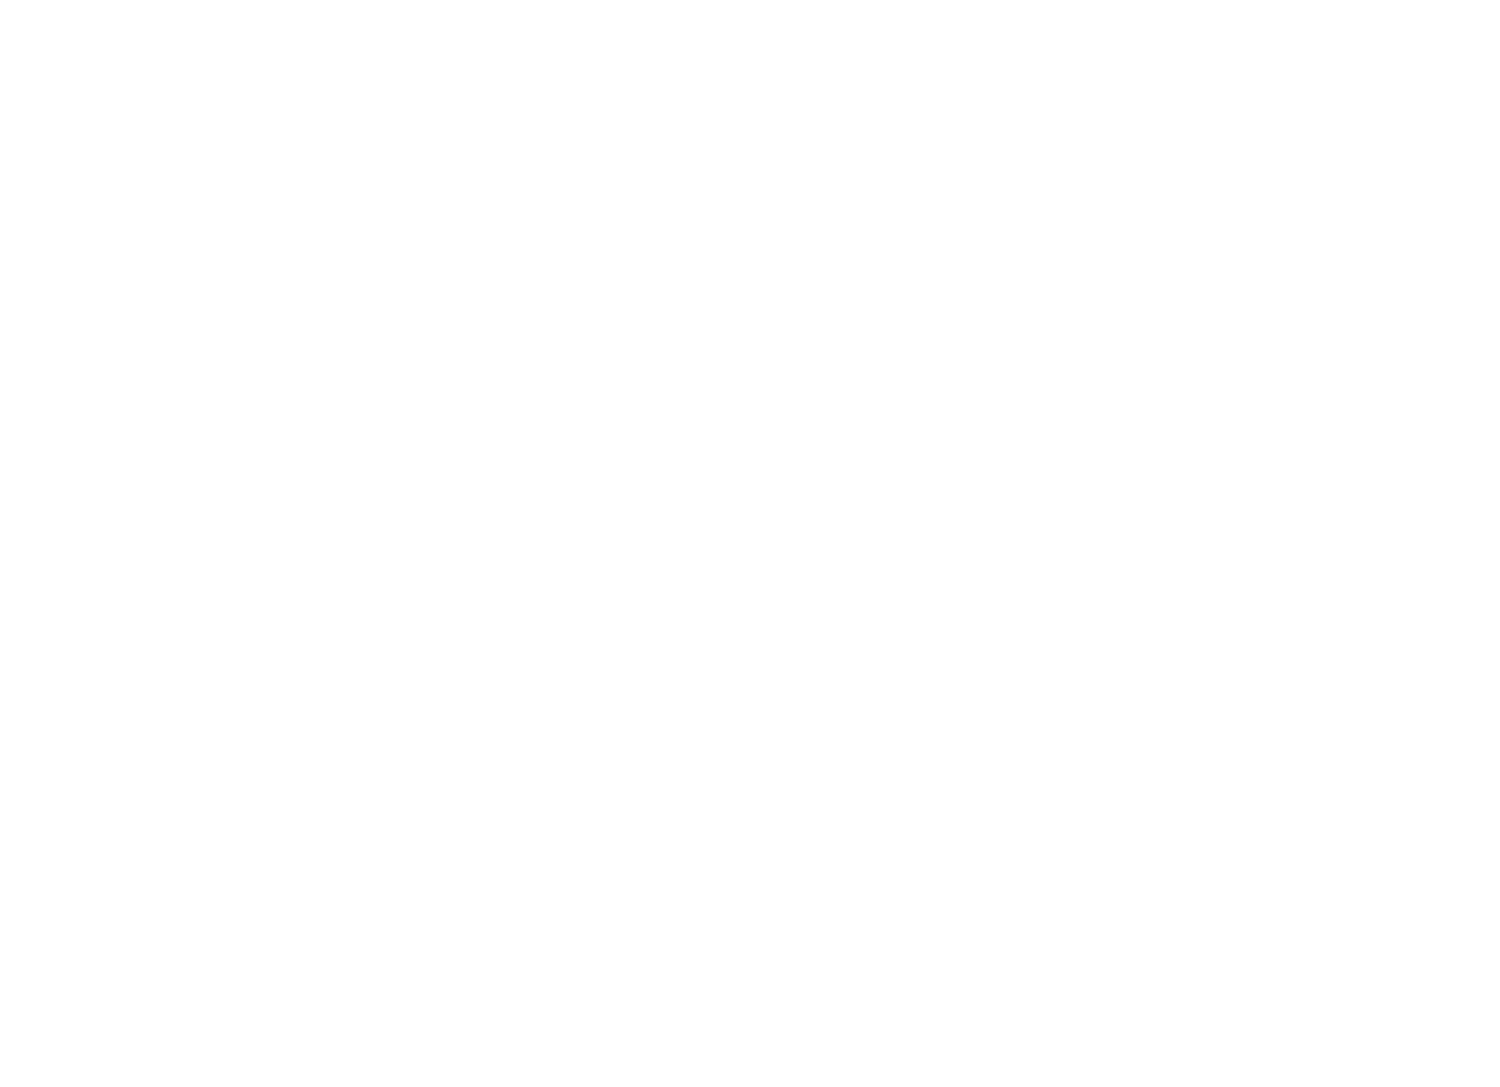 Matthew PJ Clark